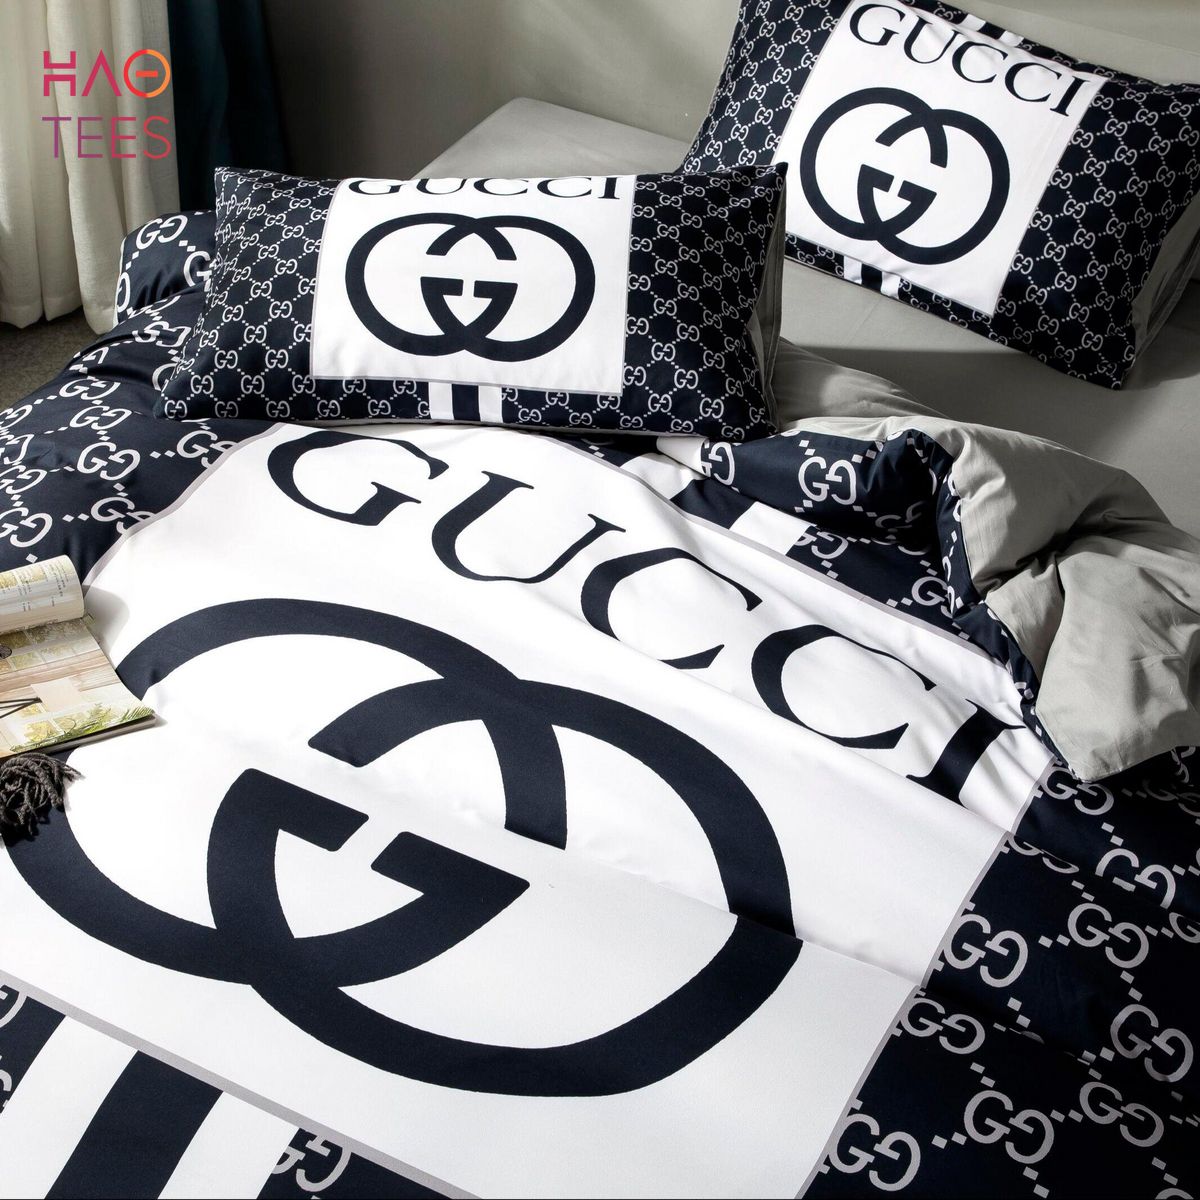 Gucci Black White Designer Bedding Sets